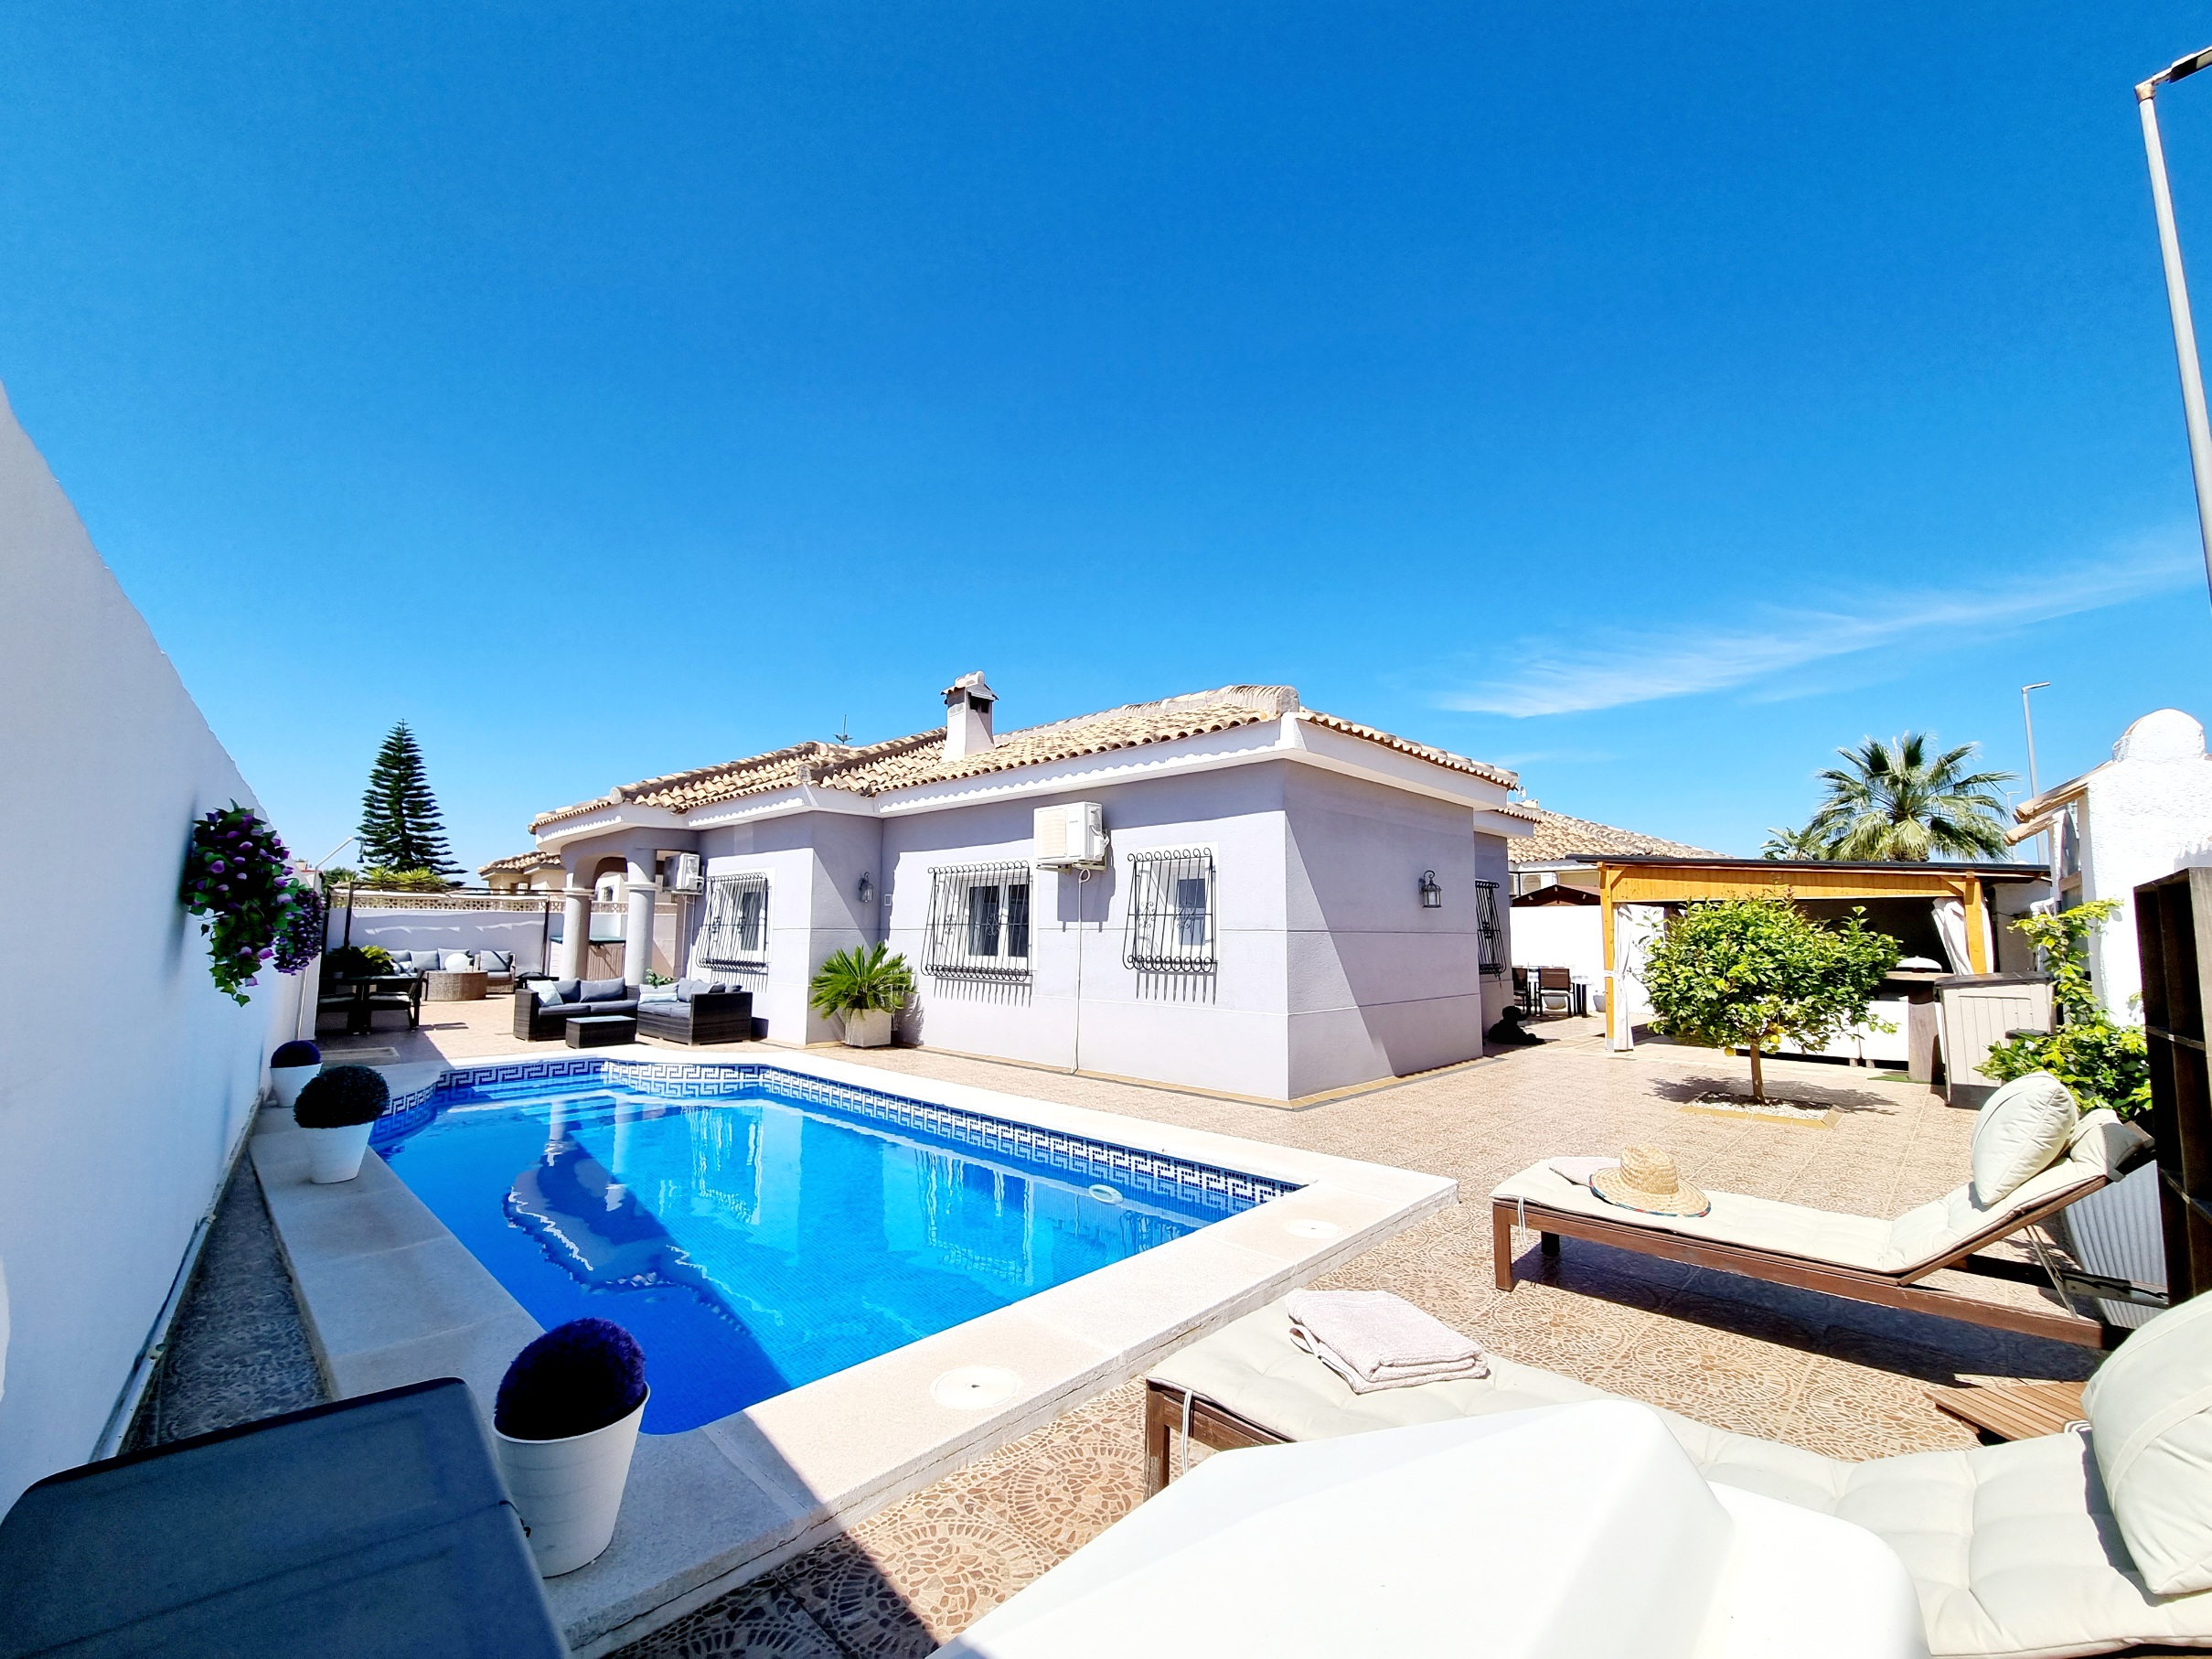 3 bed 2 bath detatched Villa with private pool – Lo Santiago – Murcia